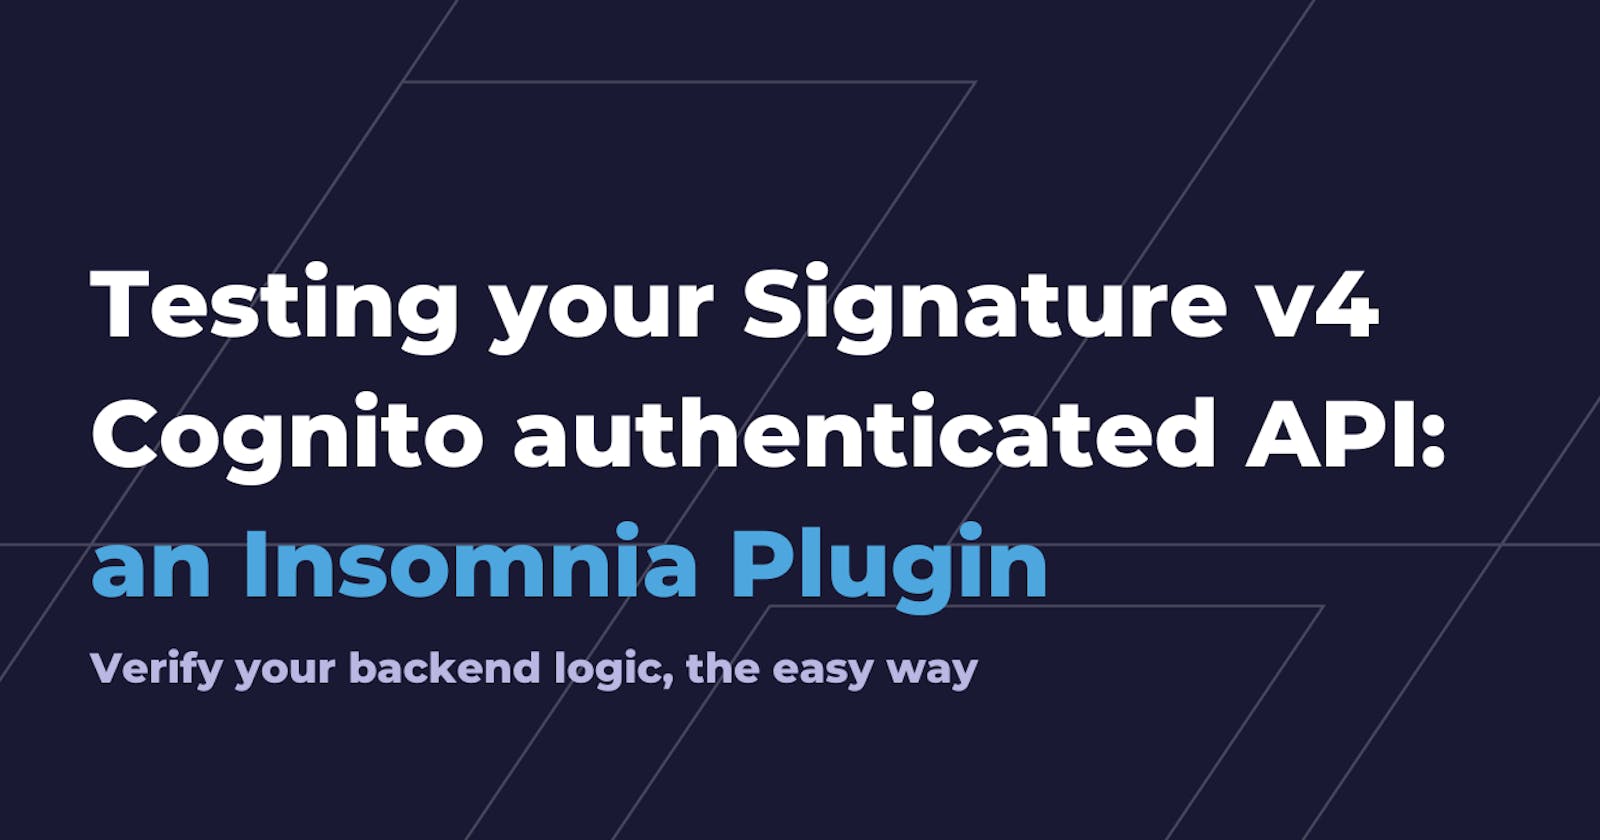 Testing your Signature v4 Cognito authenticated API: an Insomnia Plugin